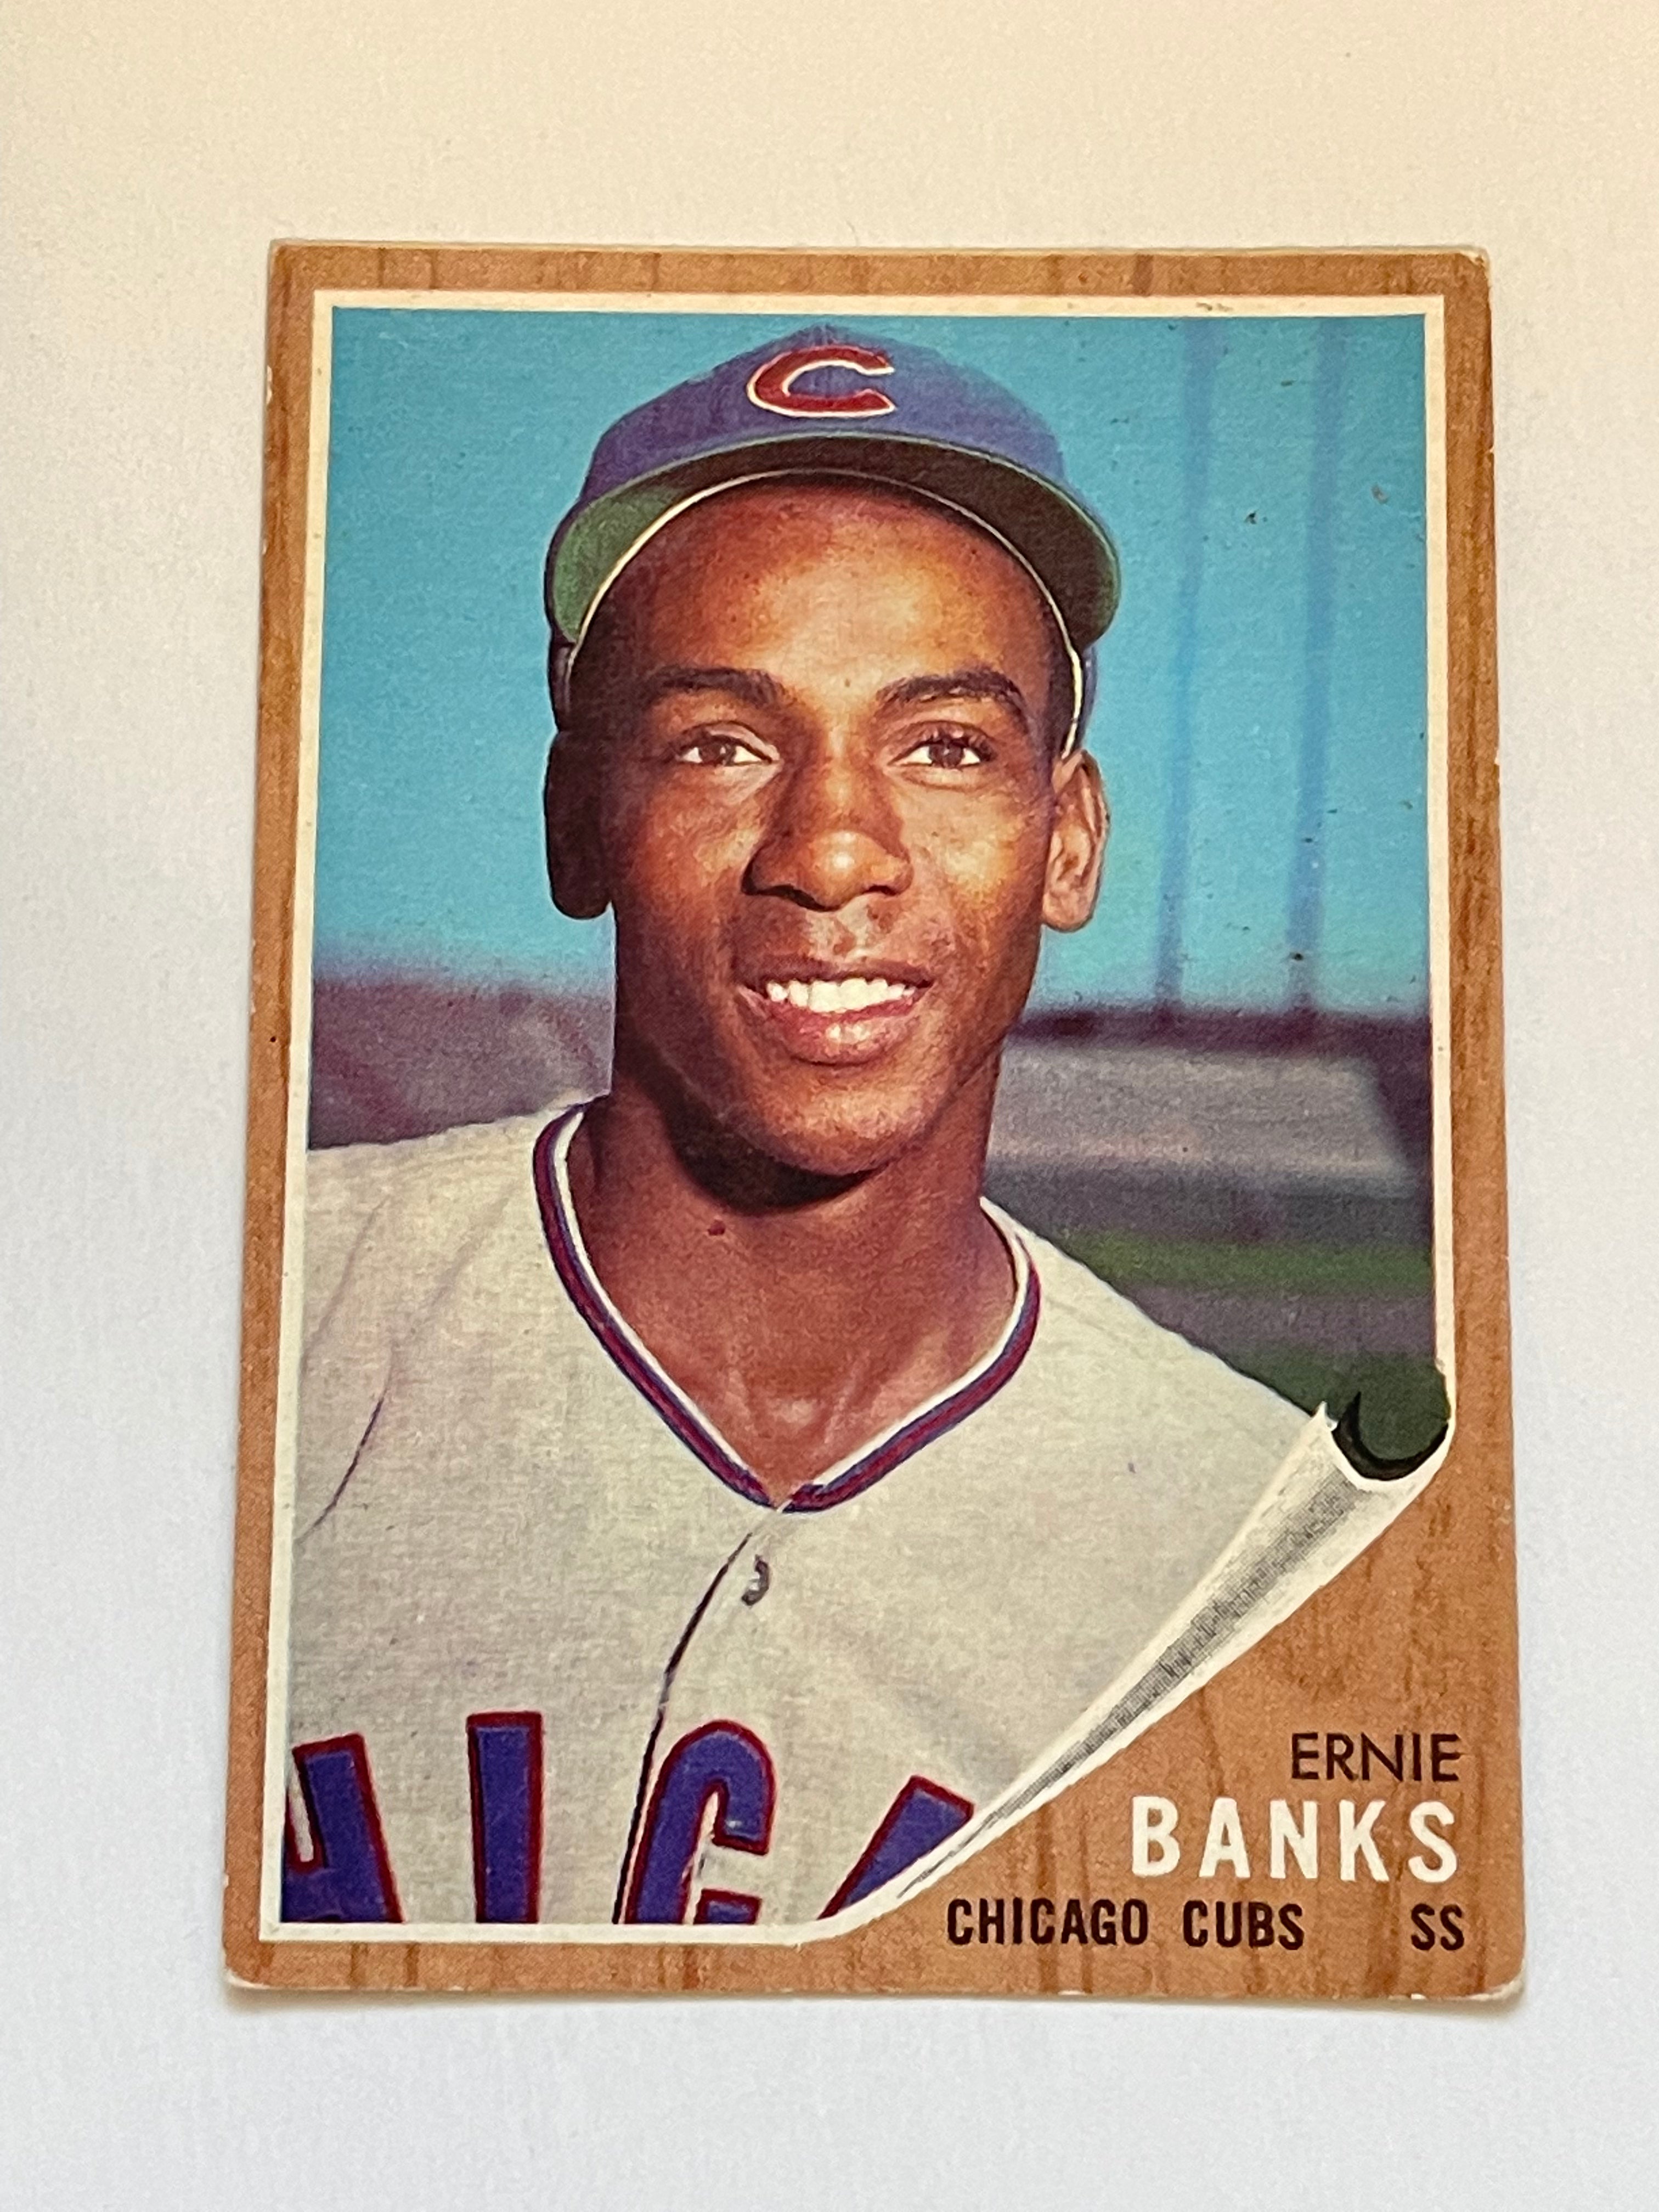 Ernie Banks Topps ex condition baseball card 1962